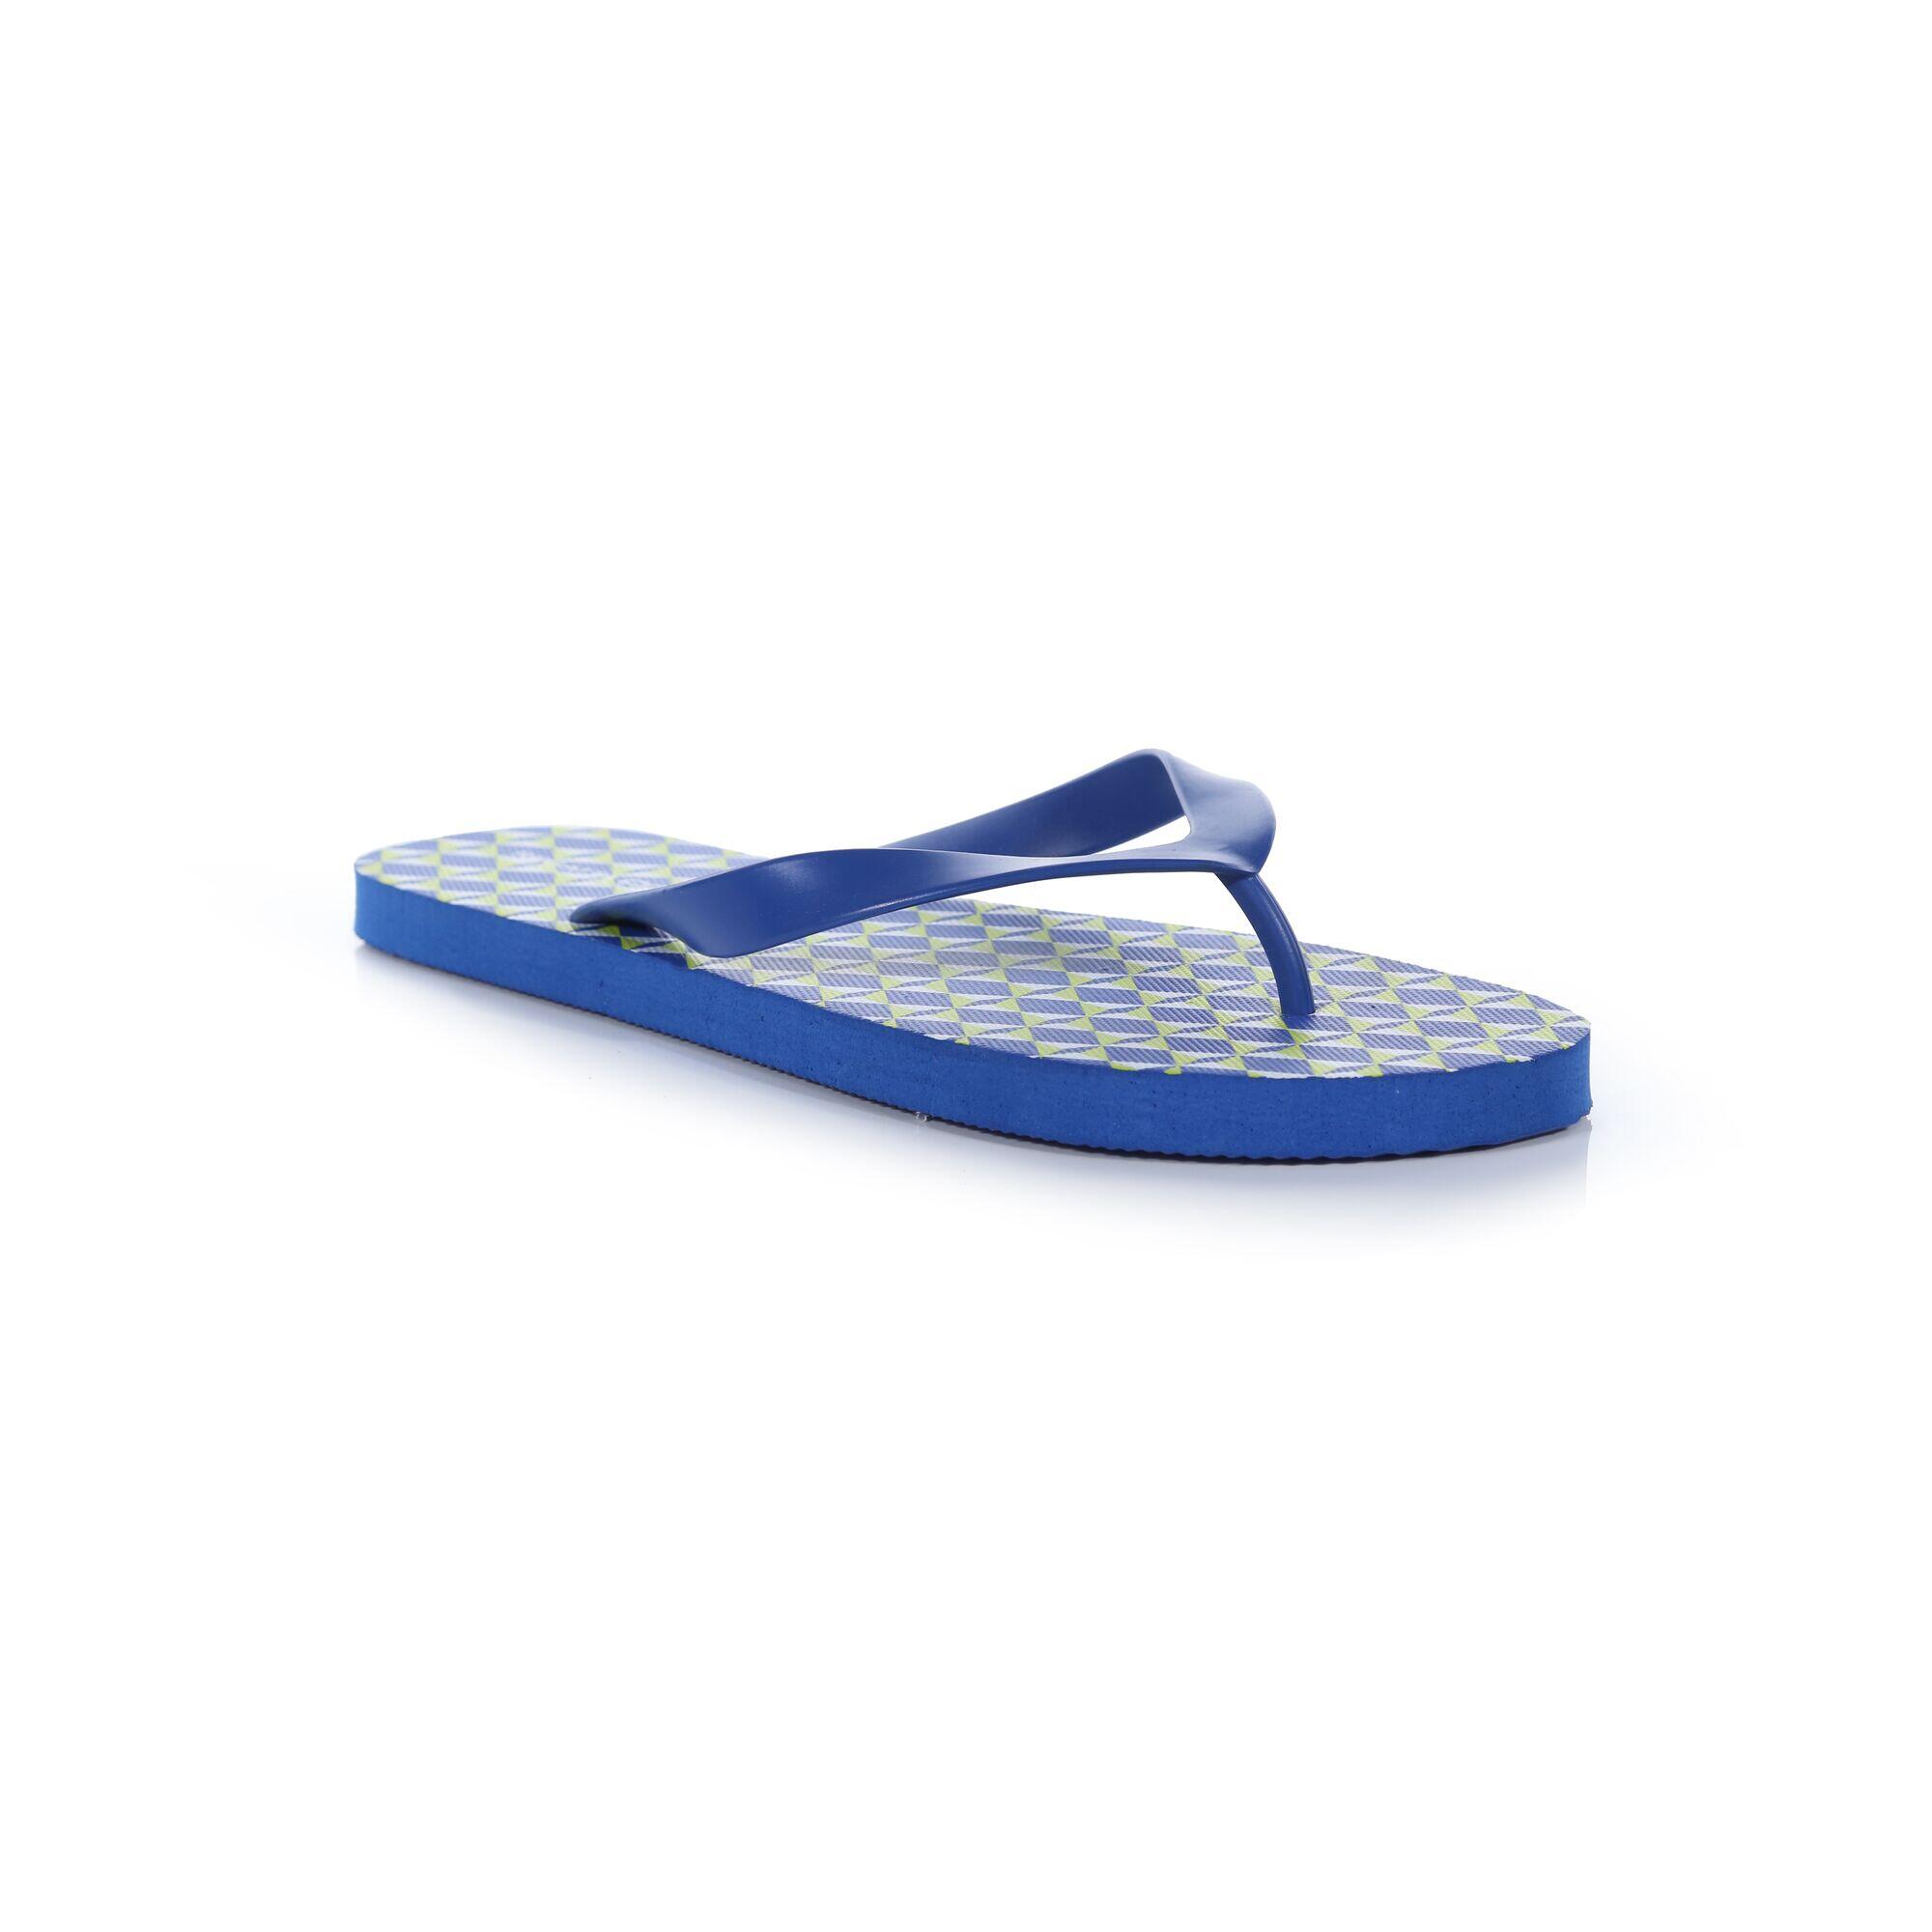 REGATTA Bali Men's Poolside Flip Flops - Lapis Blue